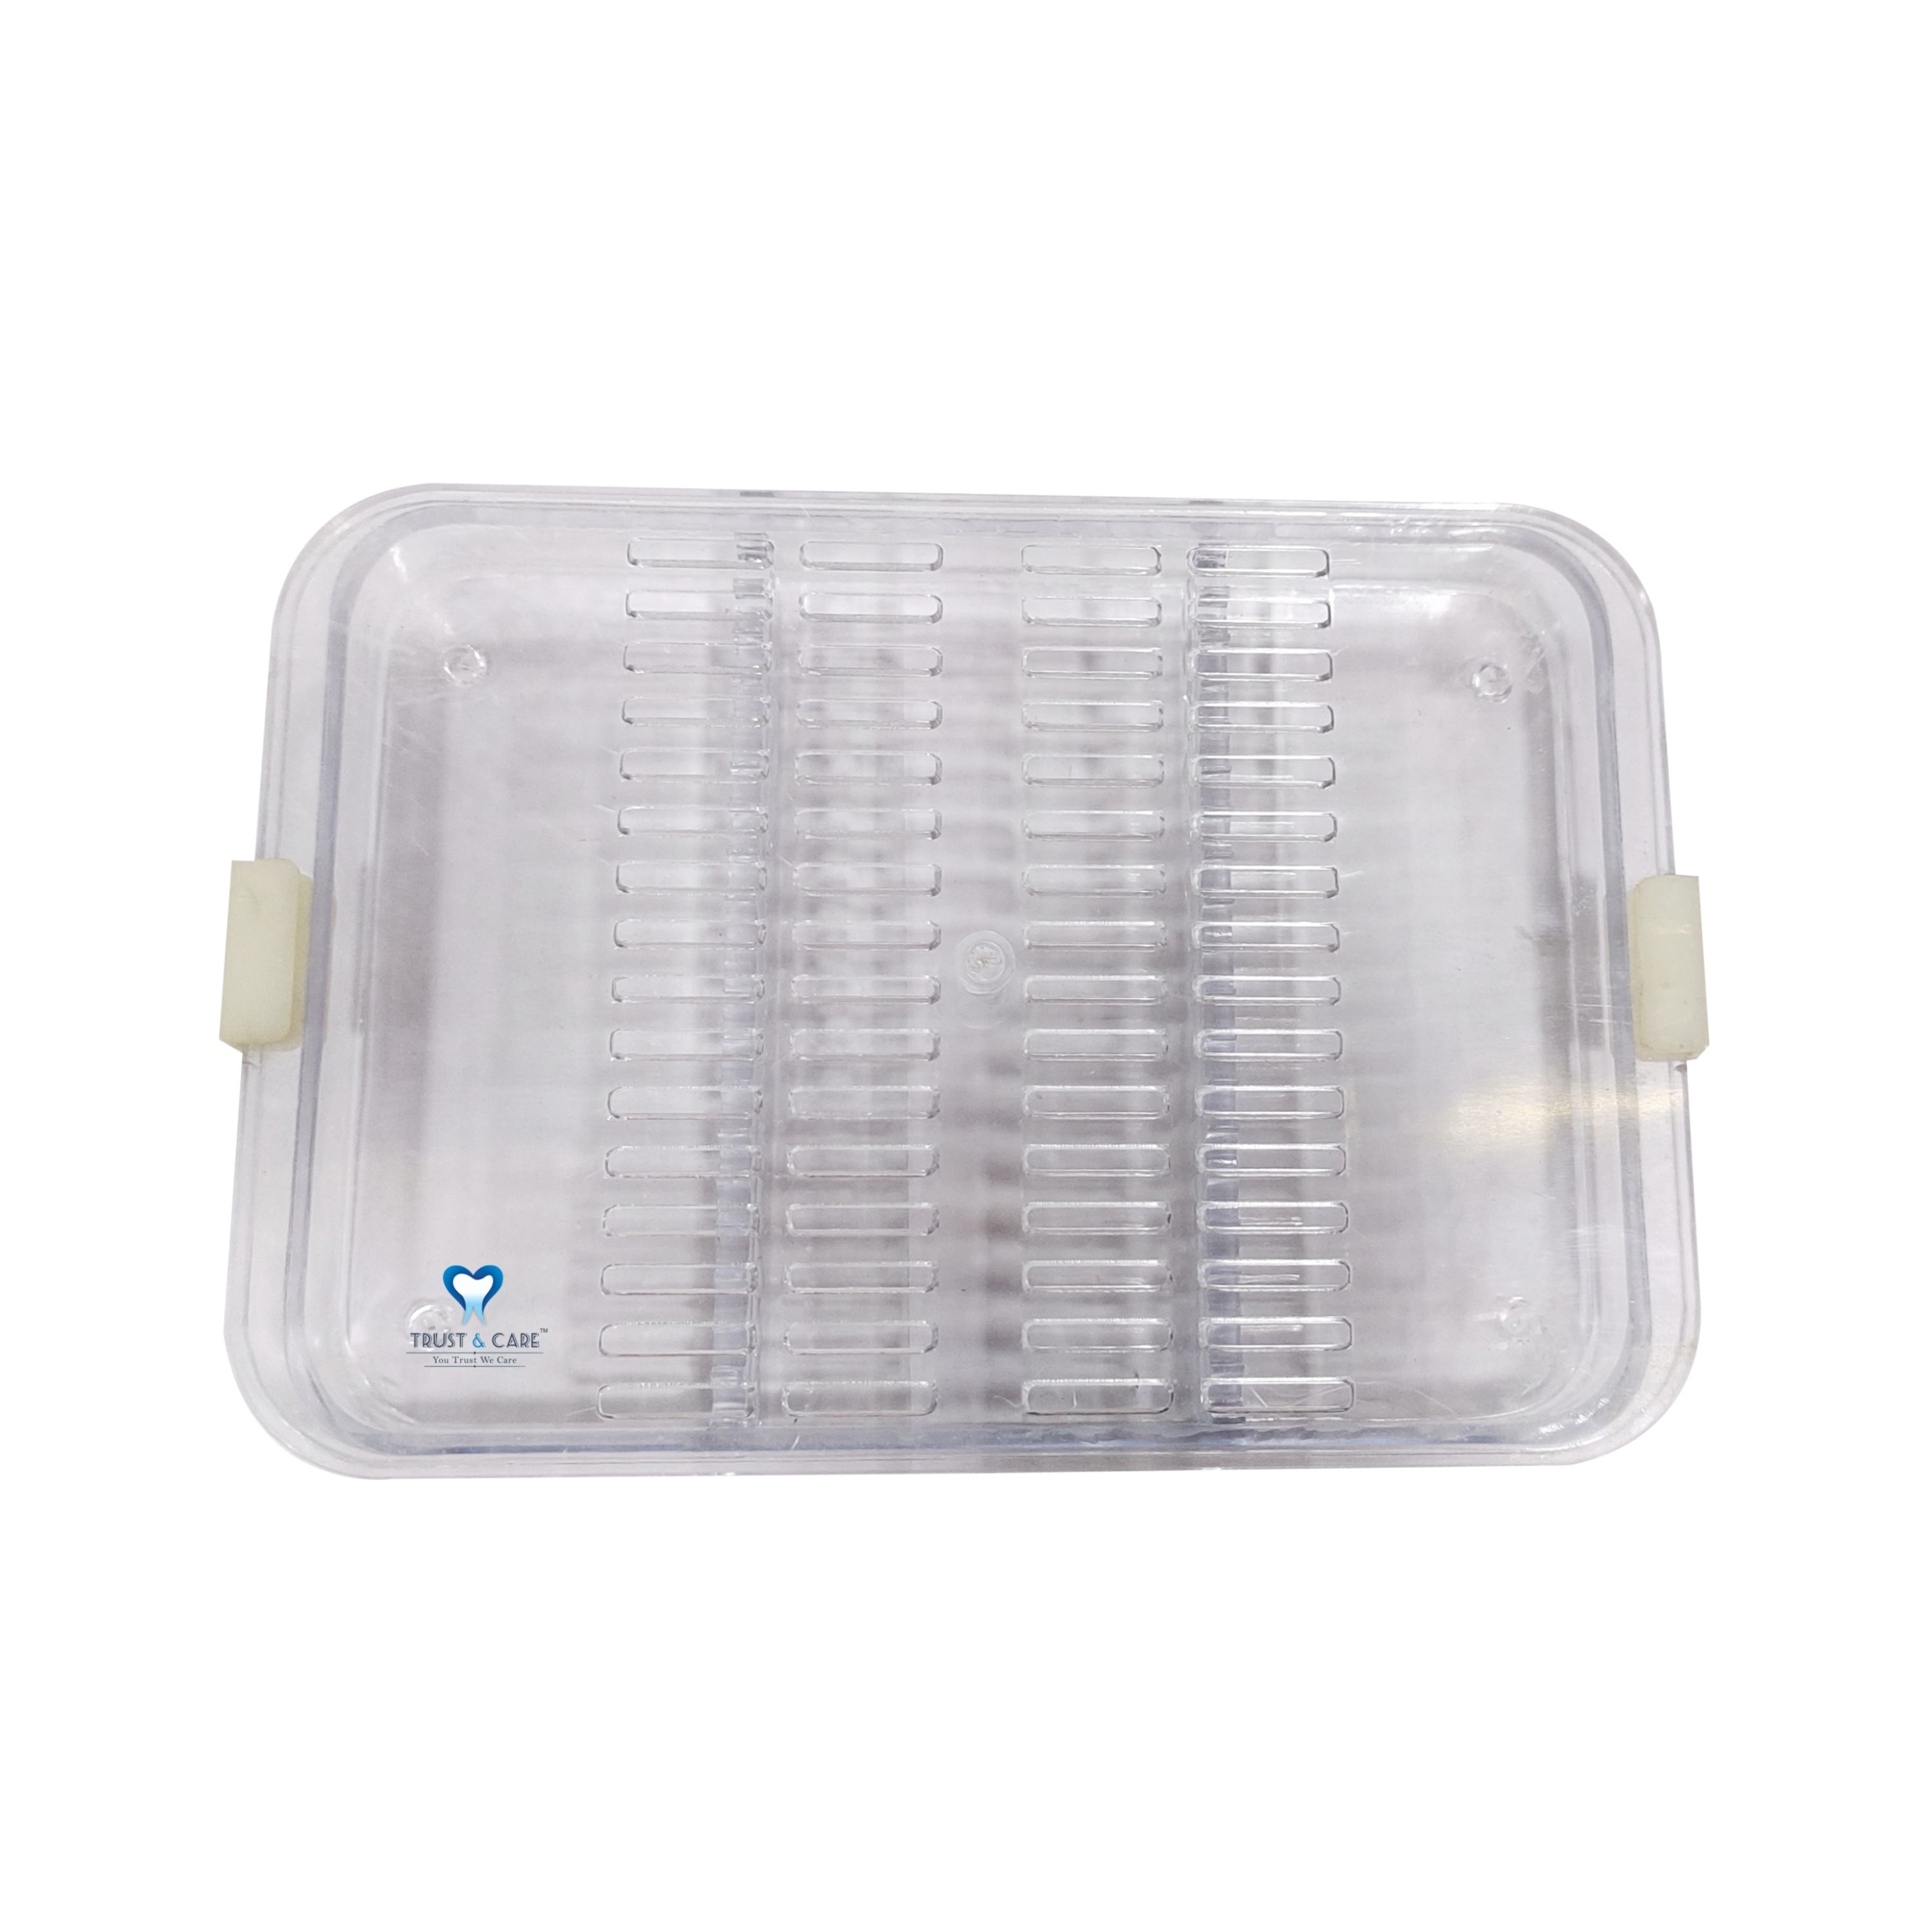 Trust & Care Plastic Instrument Sterilization Cassette For 20-Inst.